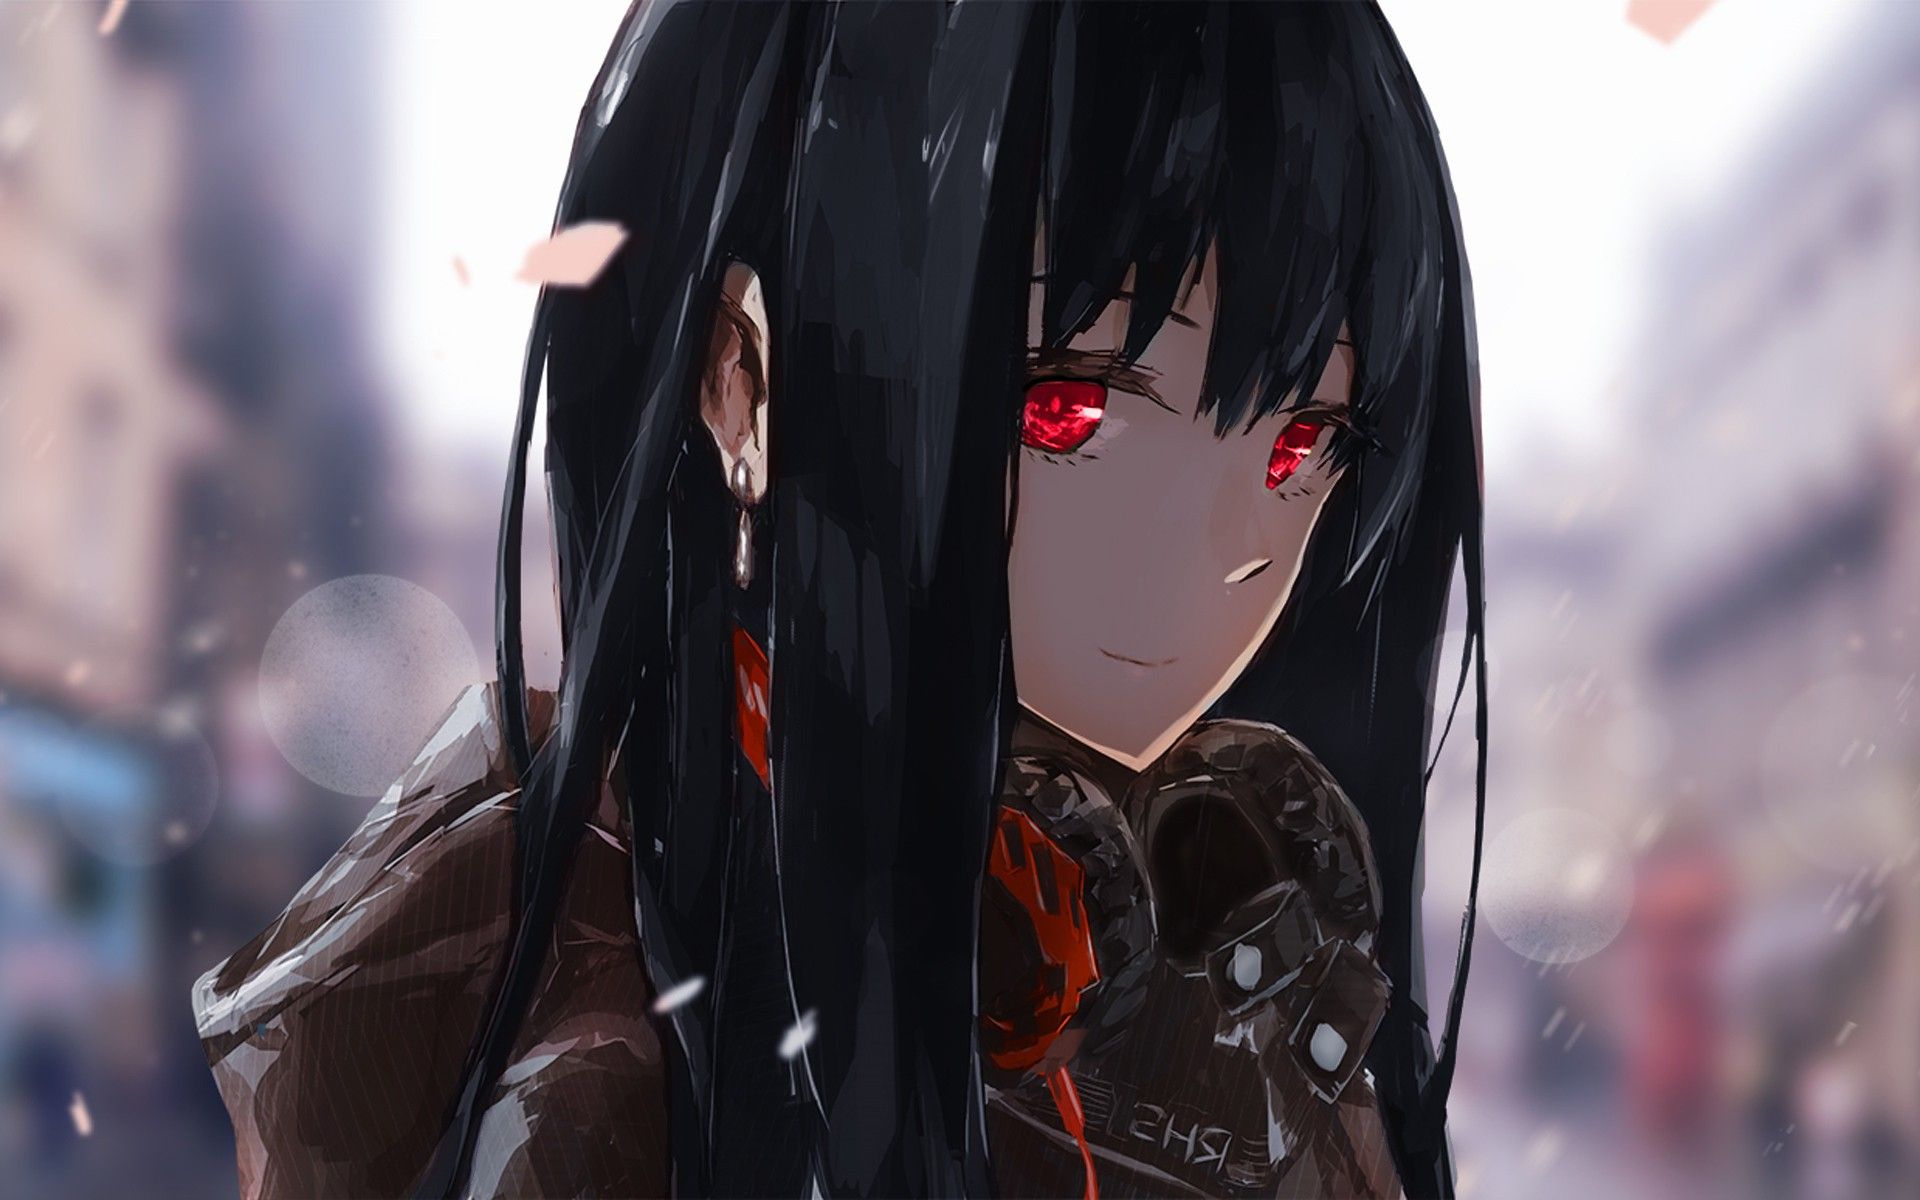 Red Eyed Anime Girl